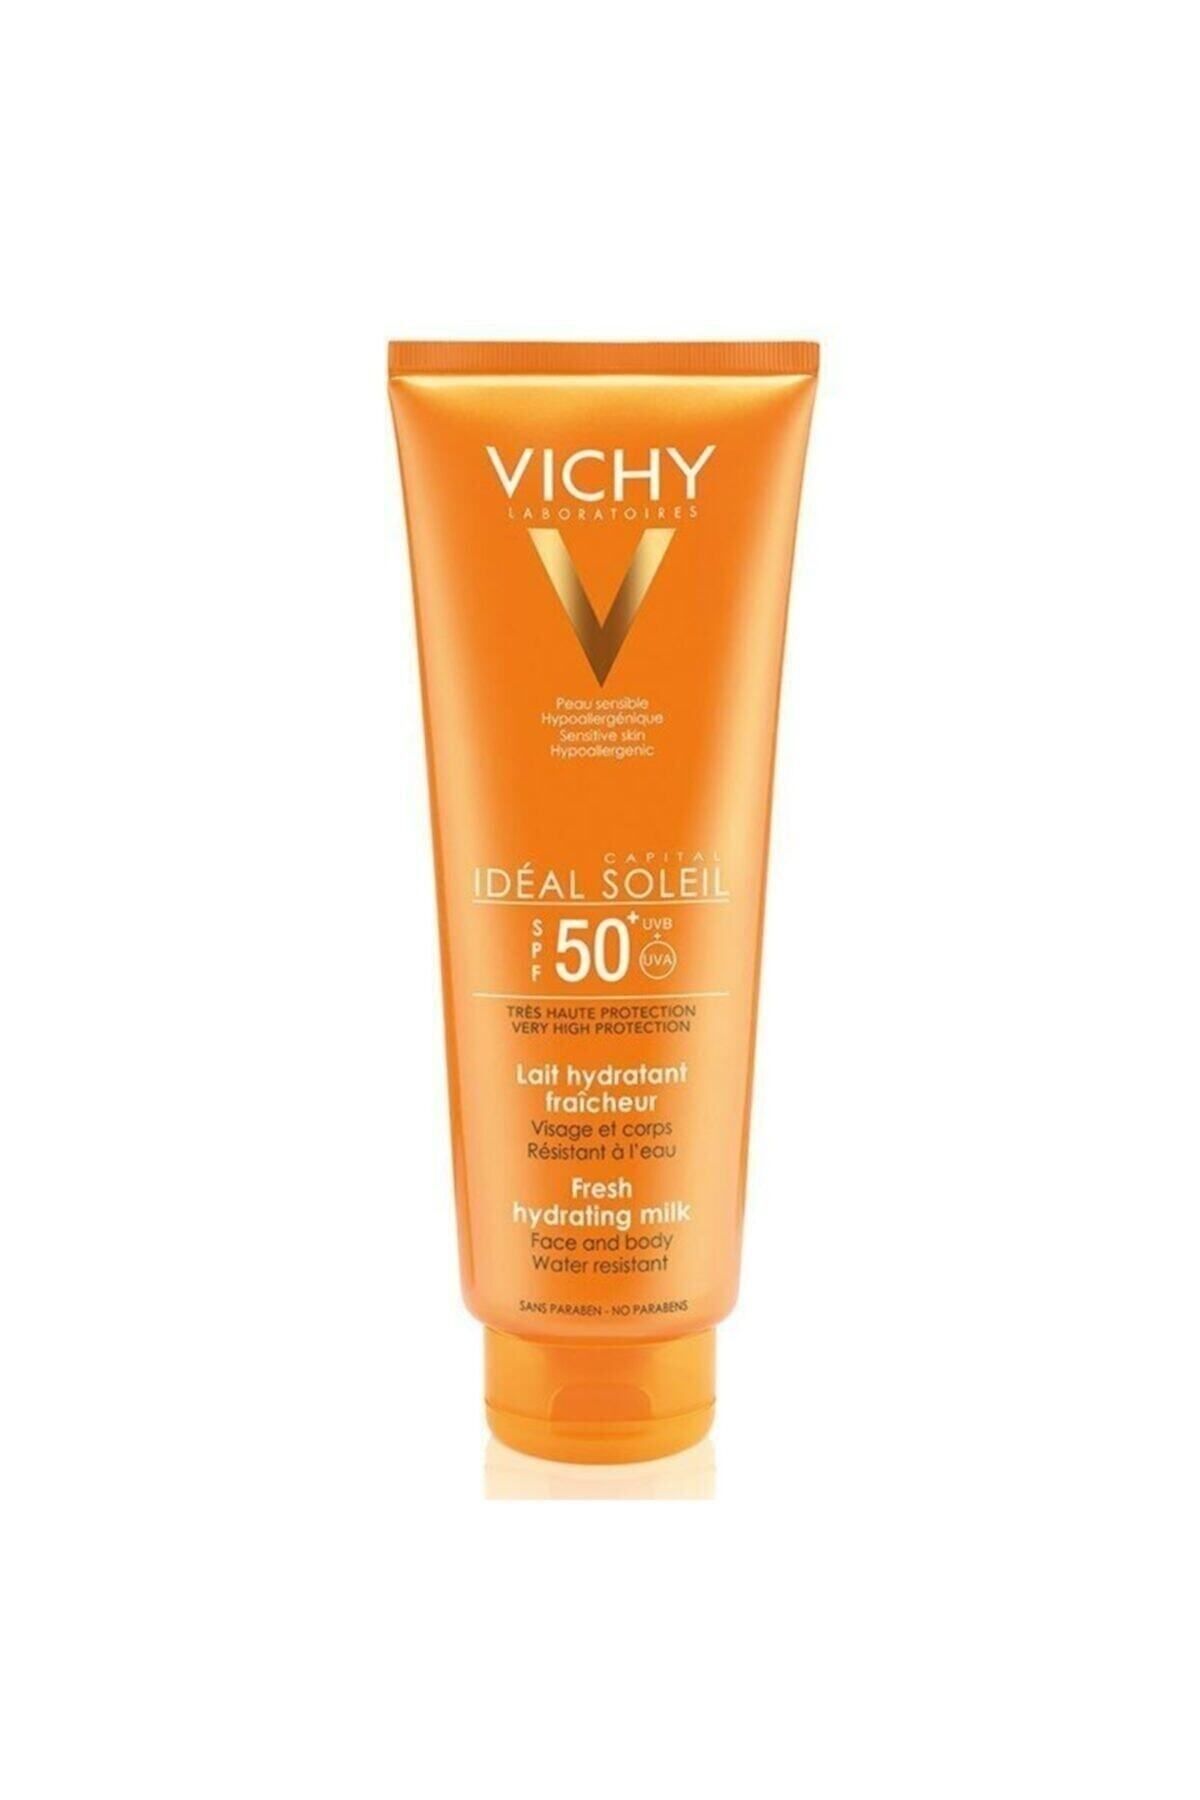 Vichy محافظت‌کننده آفتابی SPF50 با حجم 300 میلی لیتر